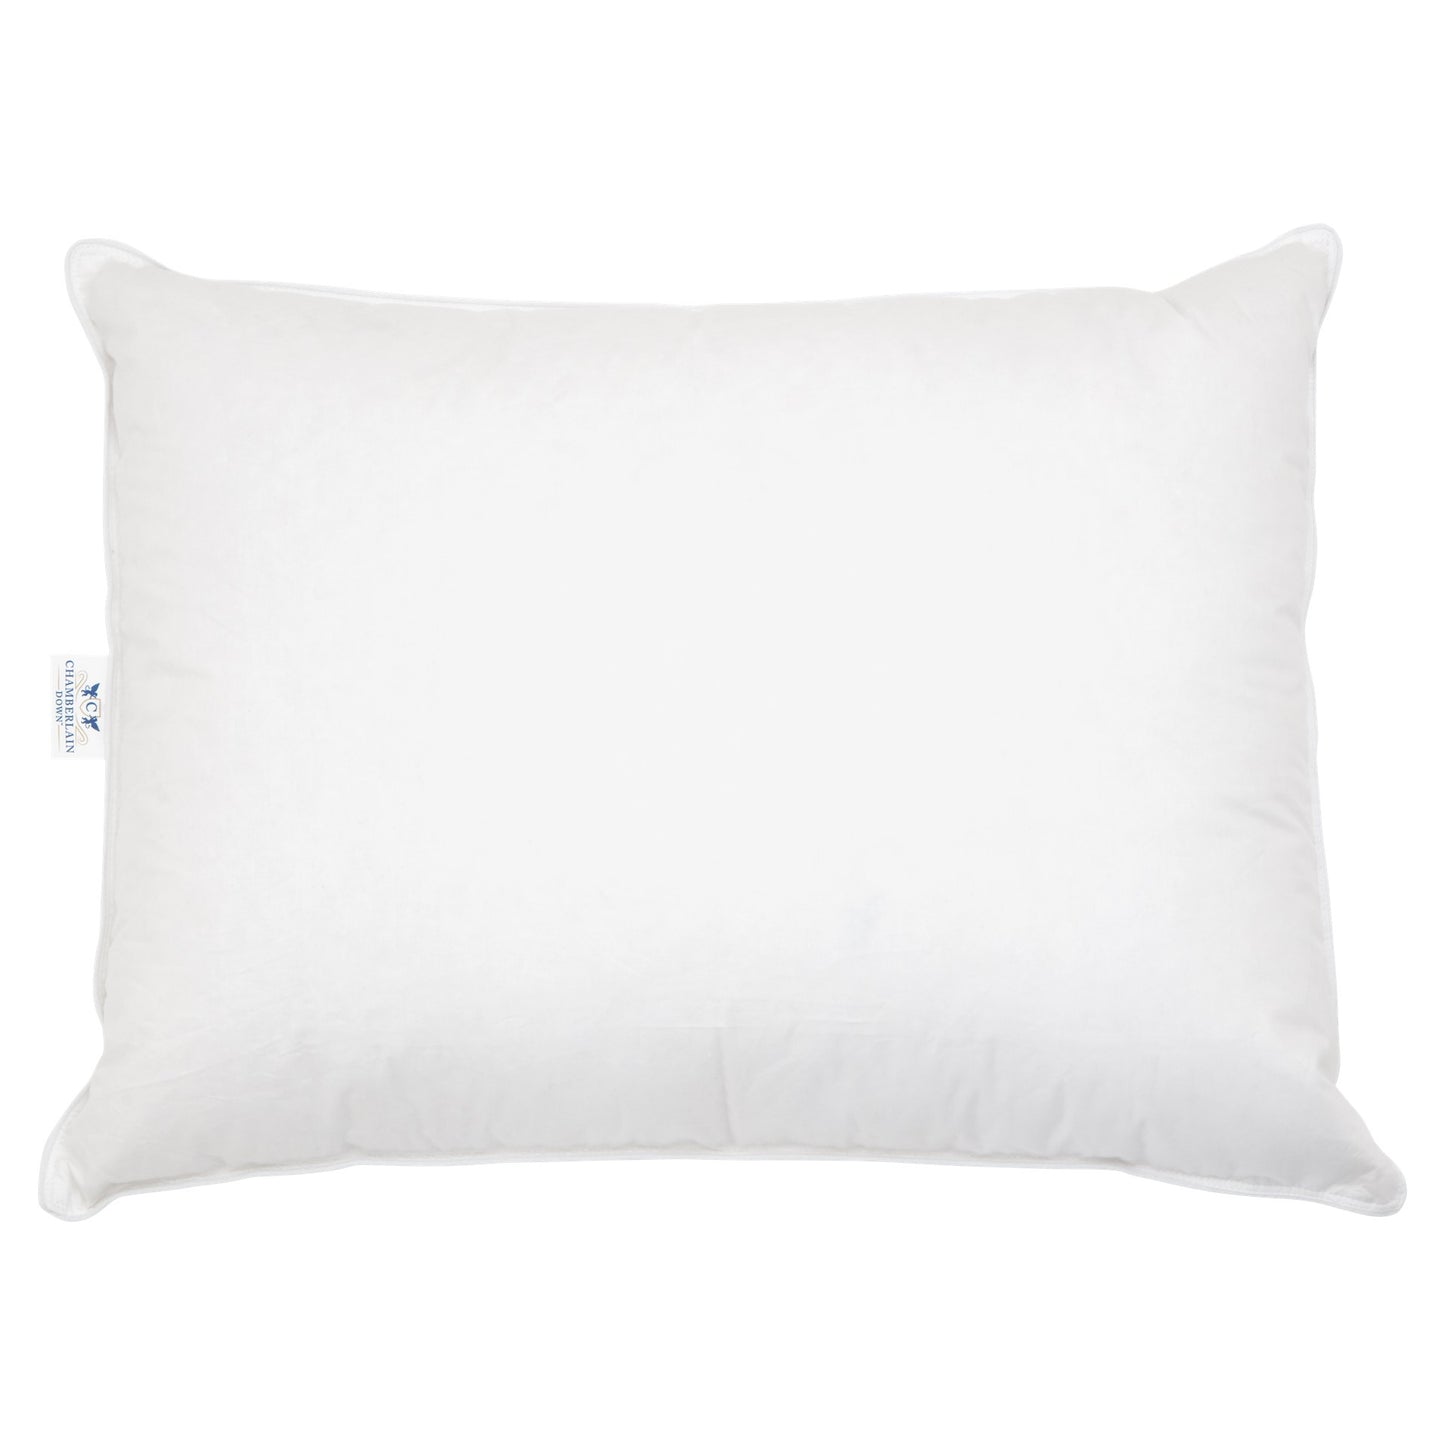 Dual-Chamber Pillow